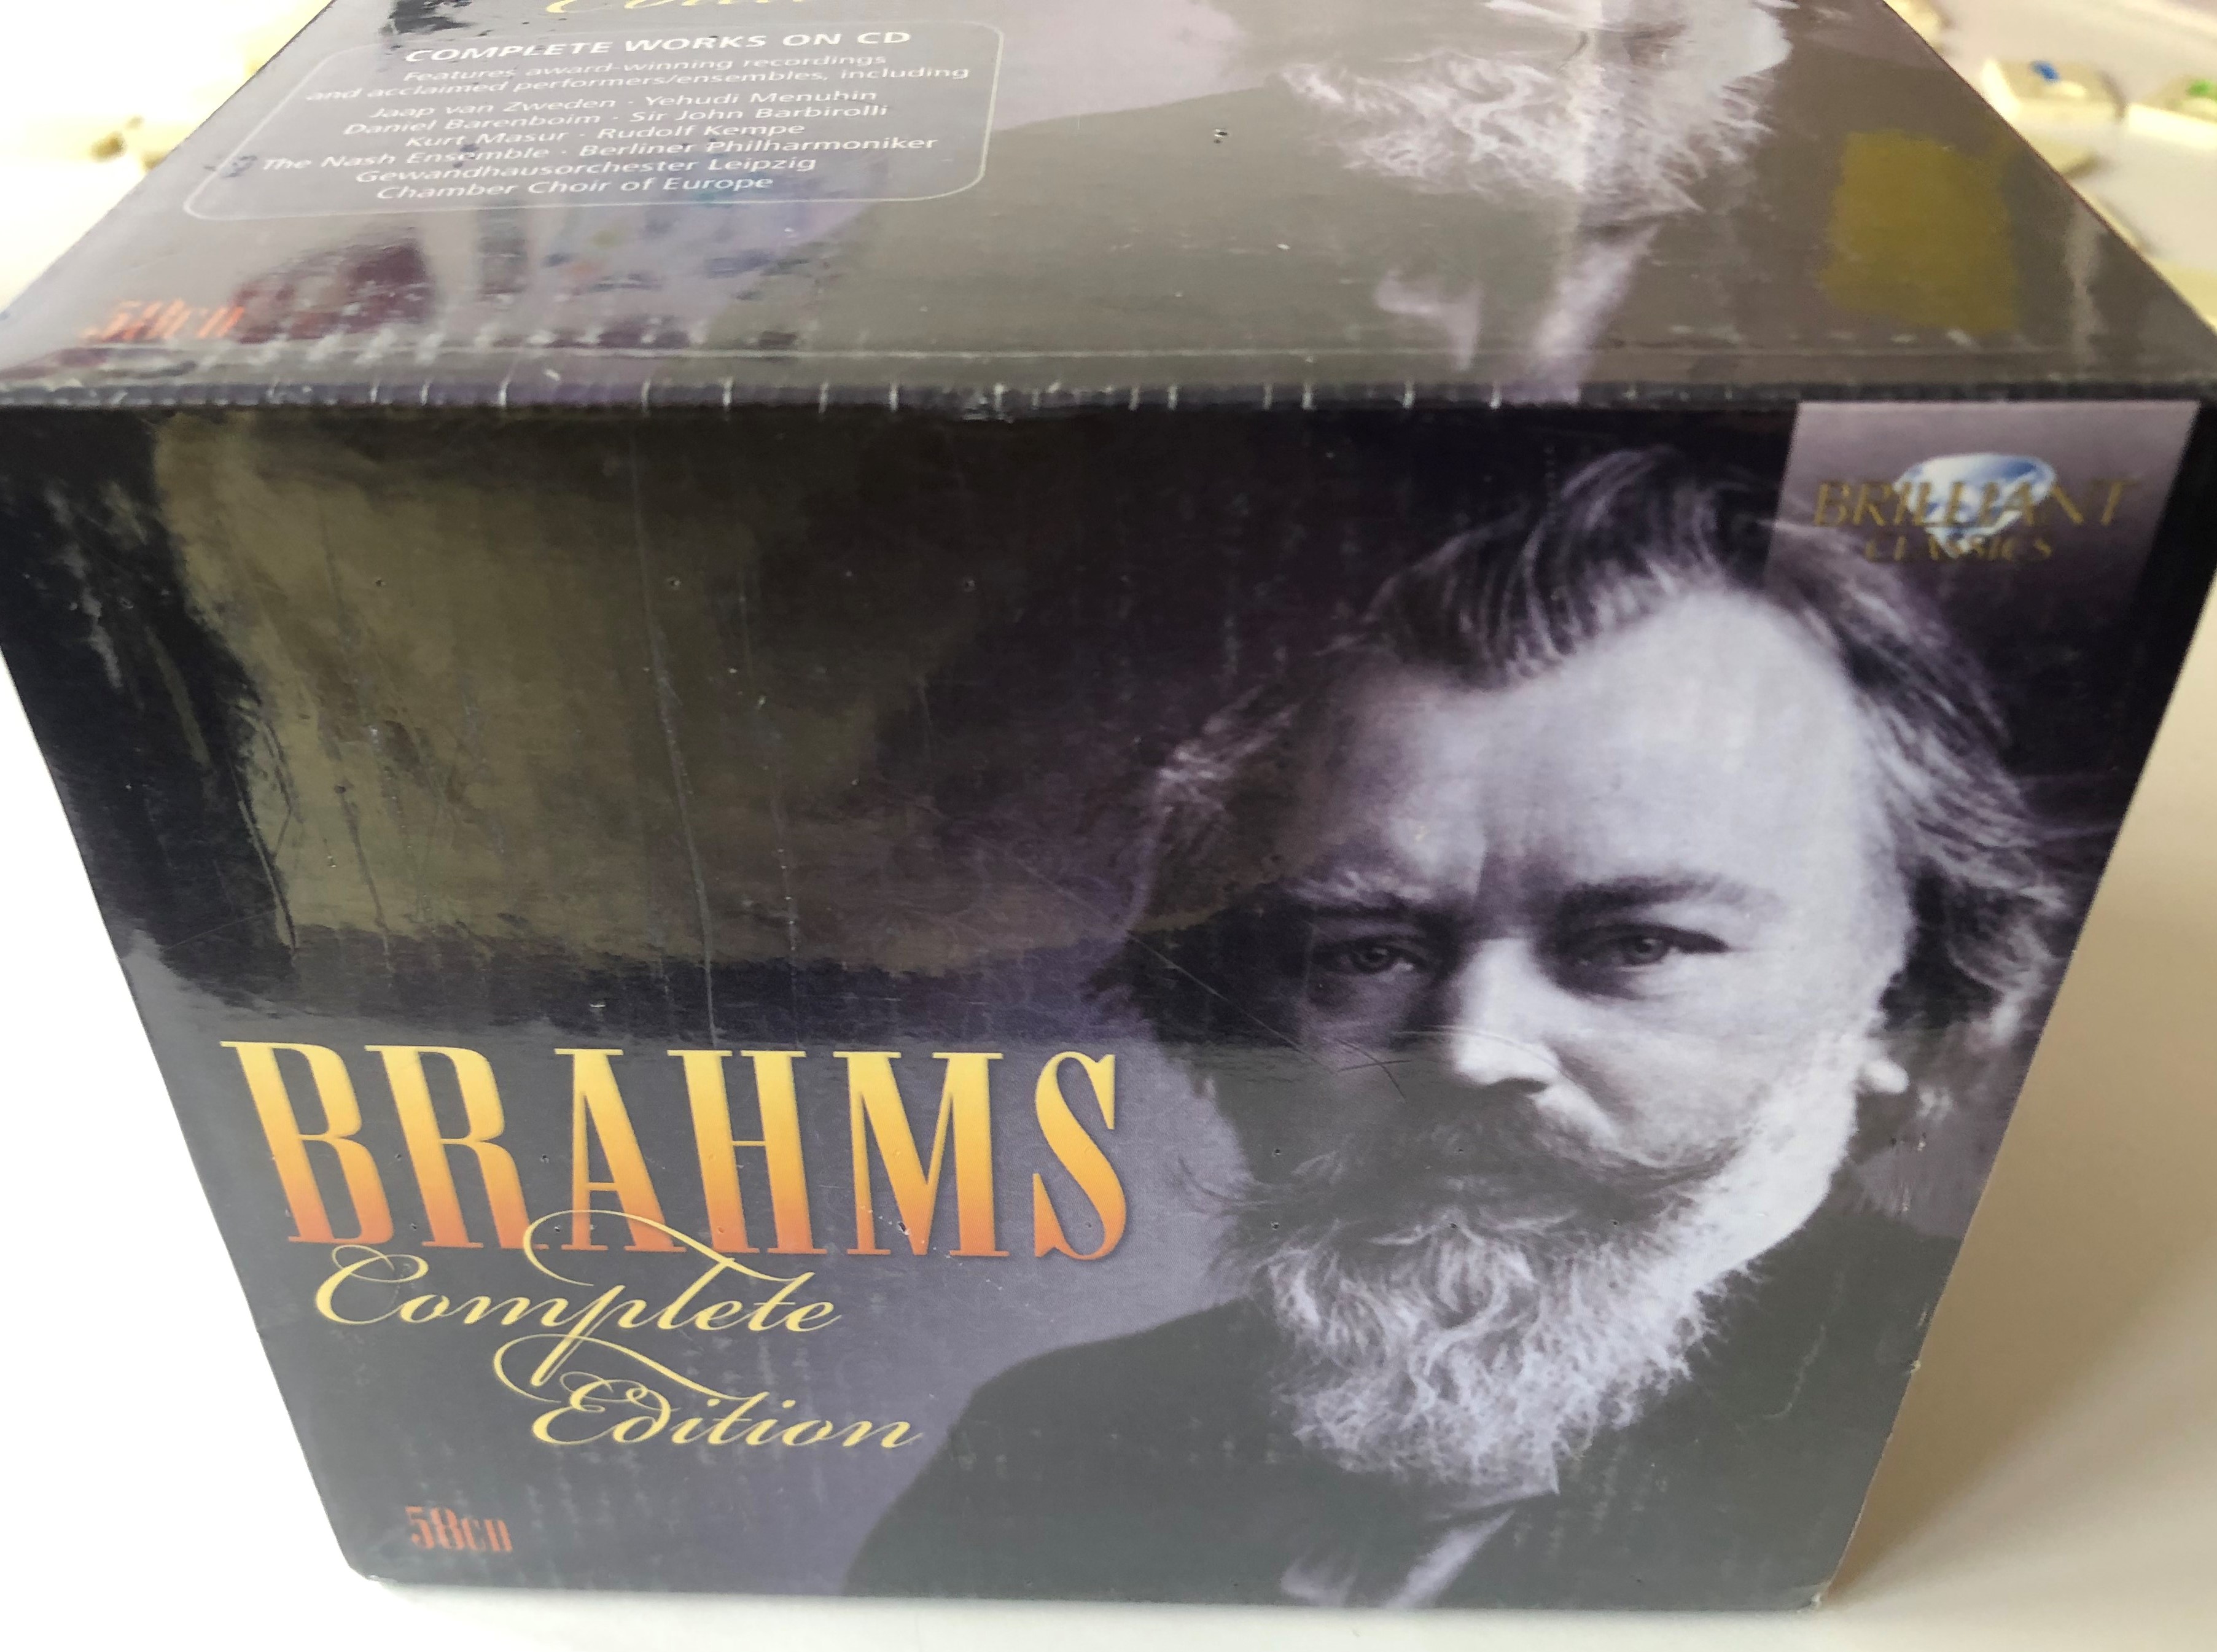 brahms-complete-edition-complete-works-on-cd-features-award-winning-recordings-and-acclaimed-performersensembles-including-jaap-van-zweden-yehudi-menuhin-daniel-barenboim...-brilliant-class.jpg